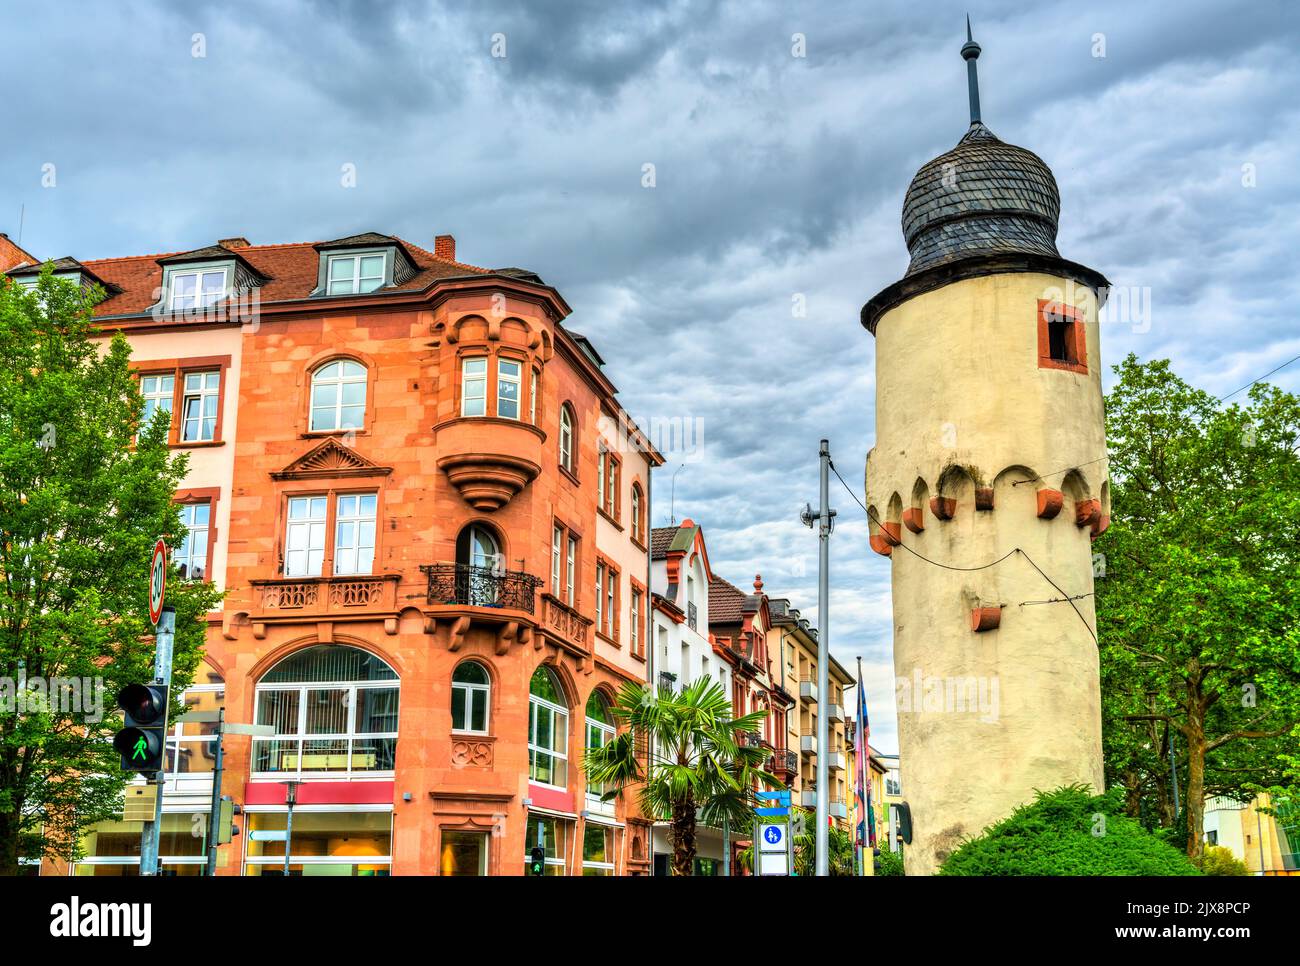 The Herstallturm Tower in Aschaffenburg - Bavaria, Germany Stock Photo